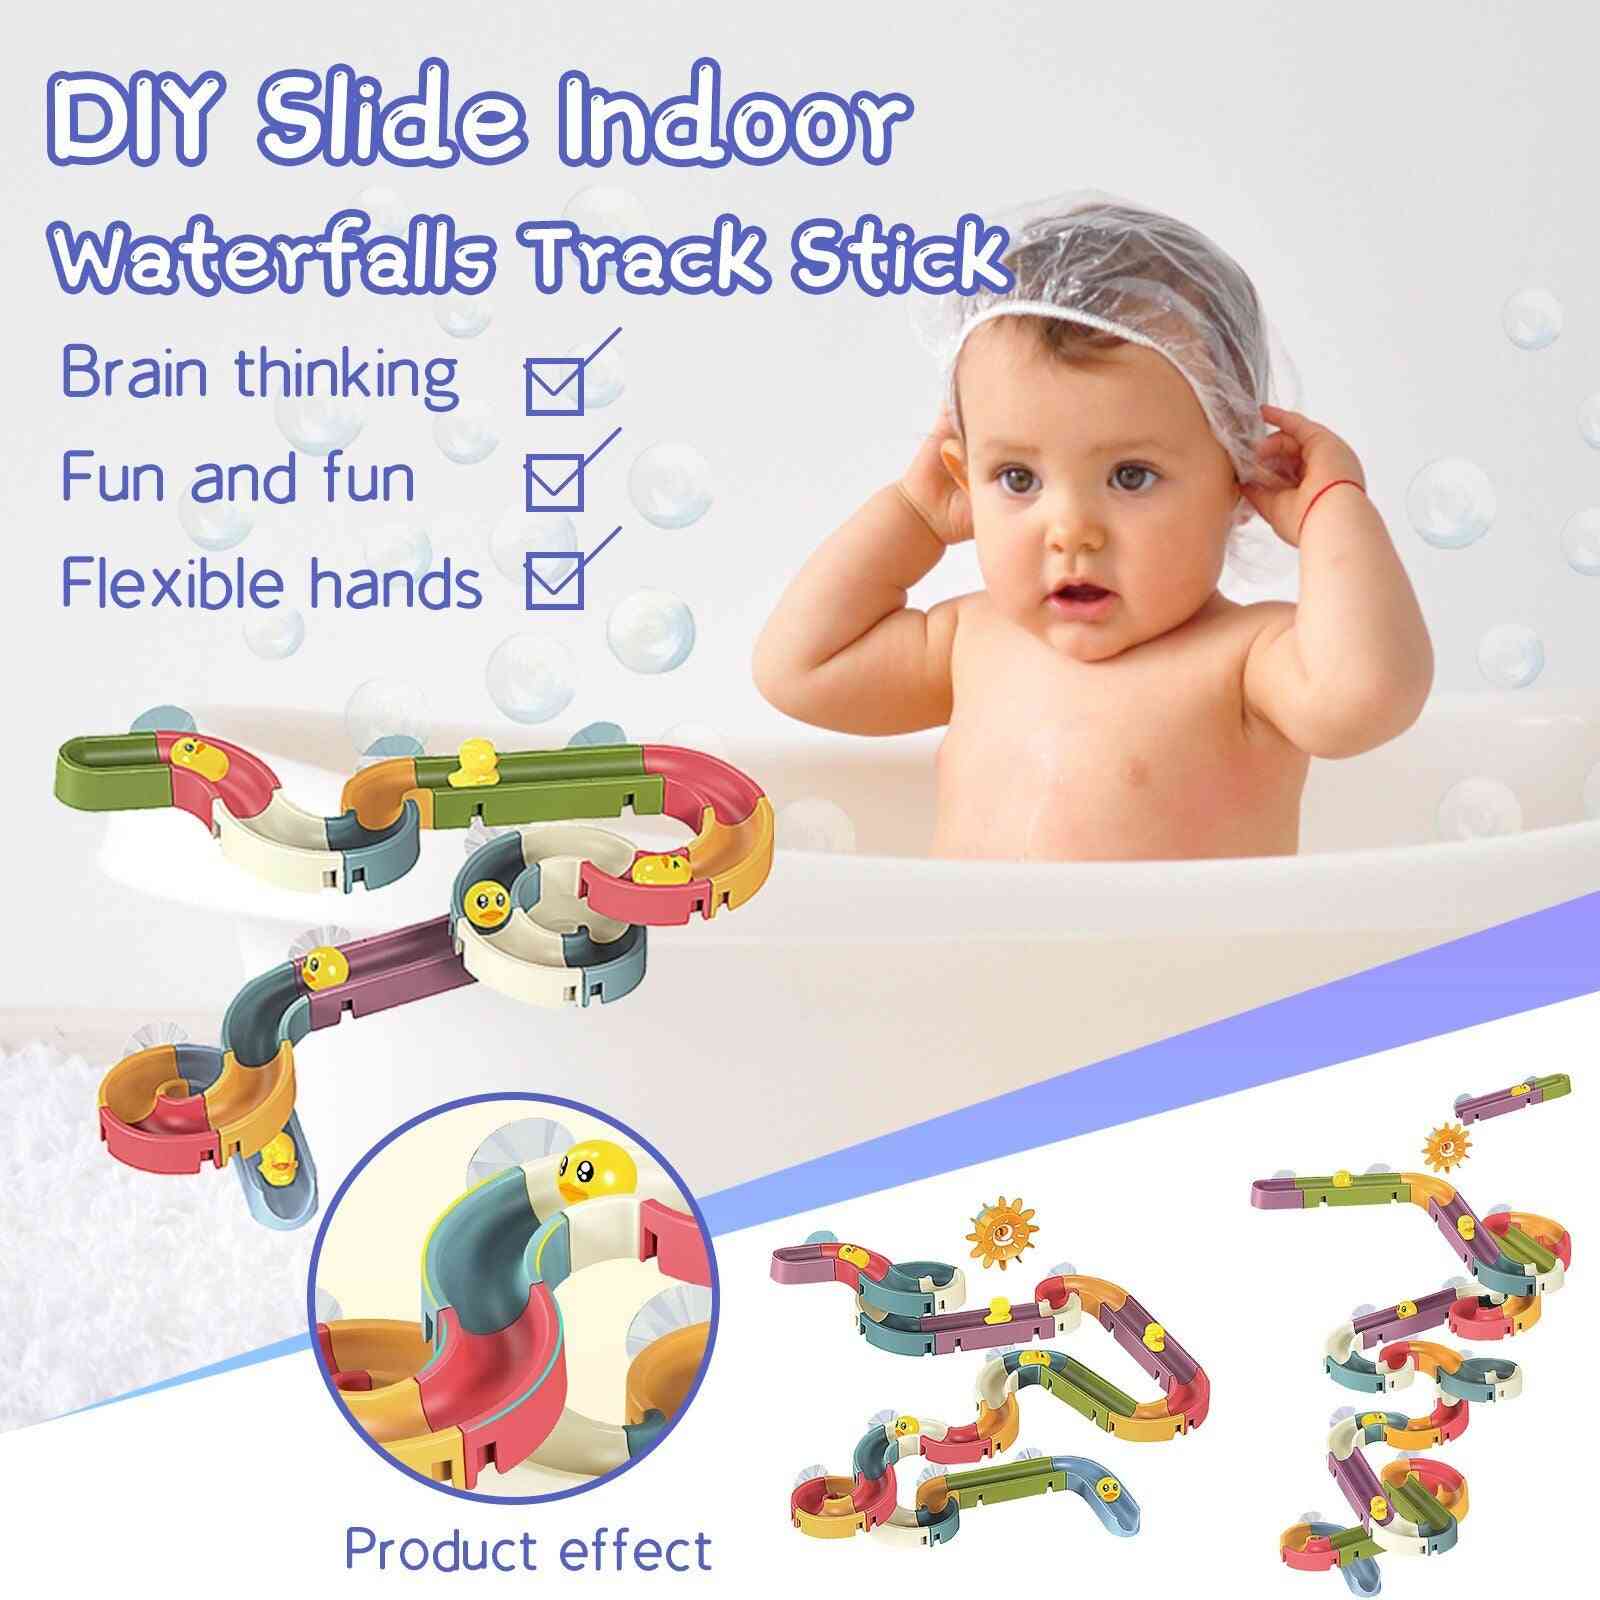 Bath Fun Slide Indoor Waterfalls Track Stick To Wall Bathtub Bathroom Swimming Water Kids